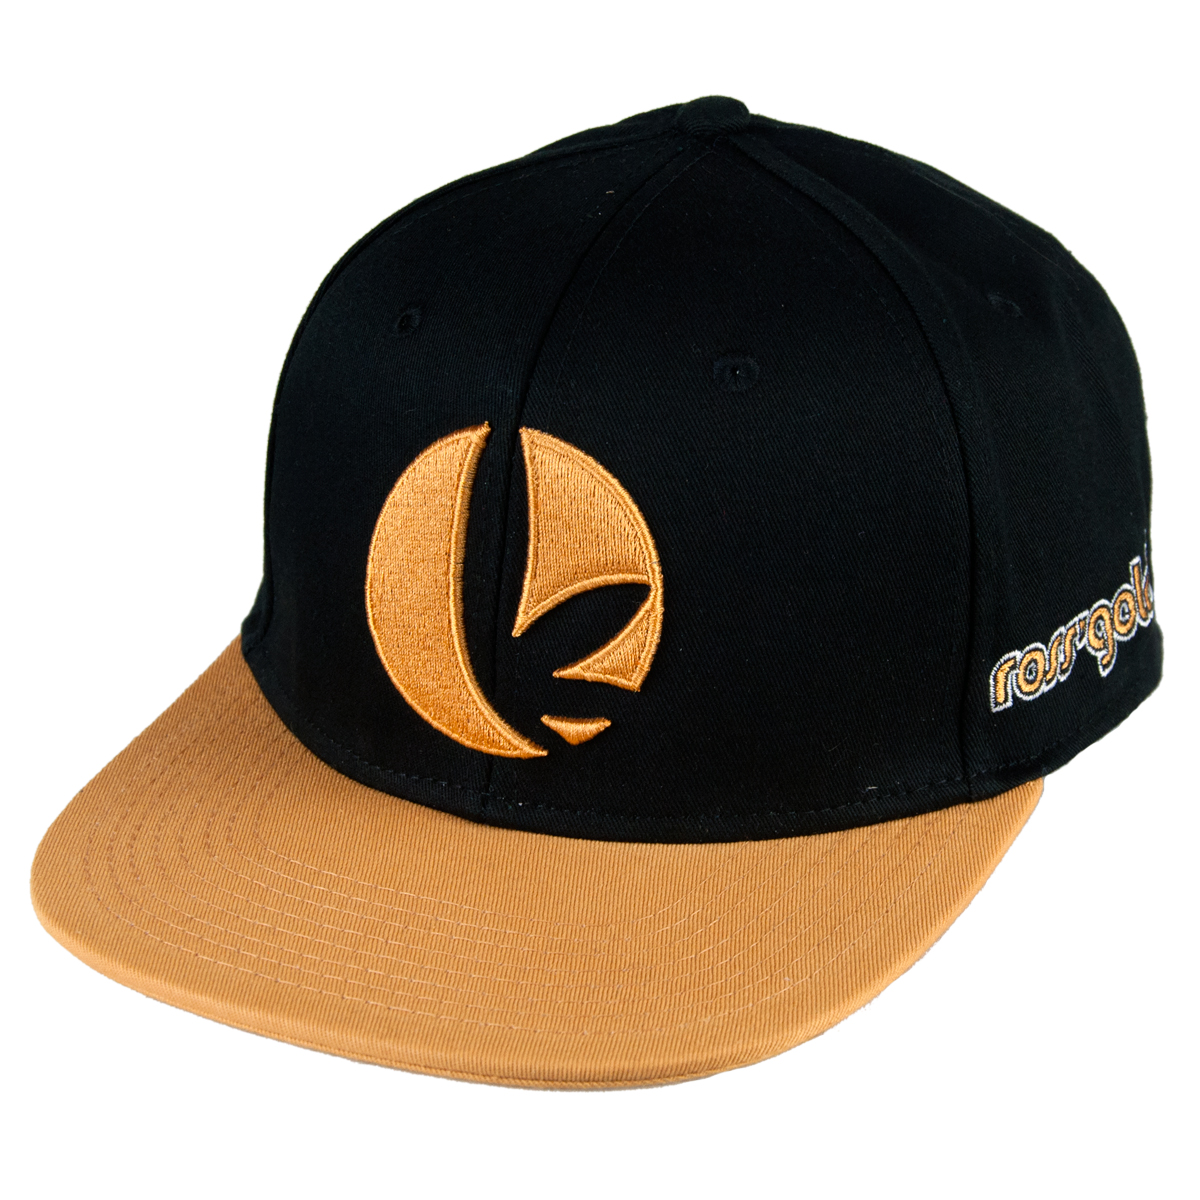 Ross' Gold marijuana hat wholesale